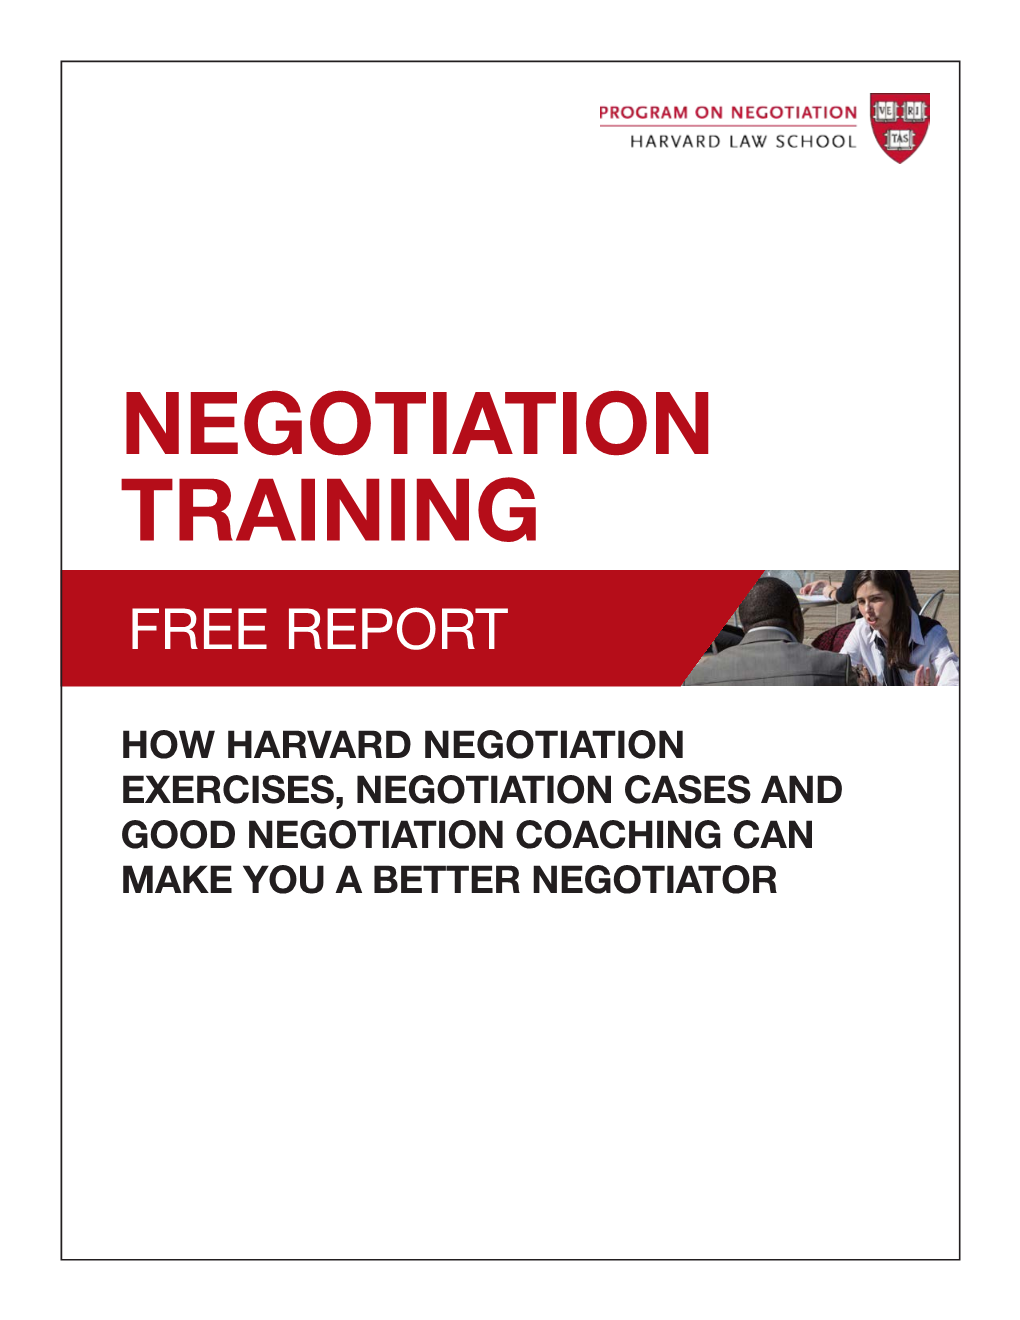 Negotiation Training Free Report